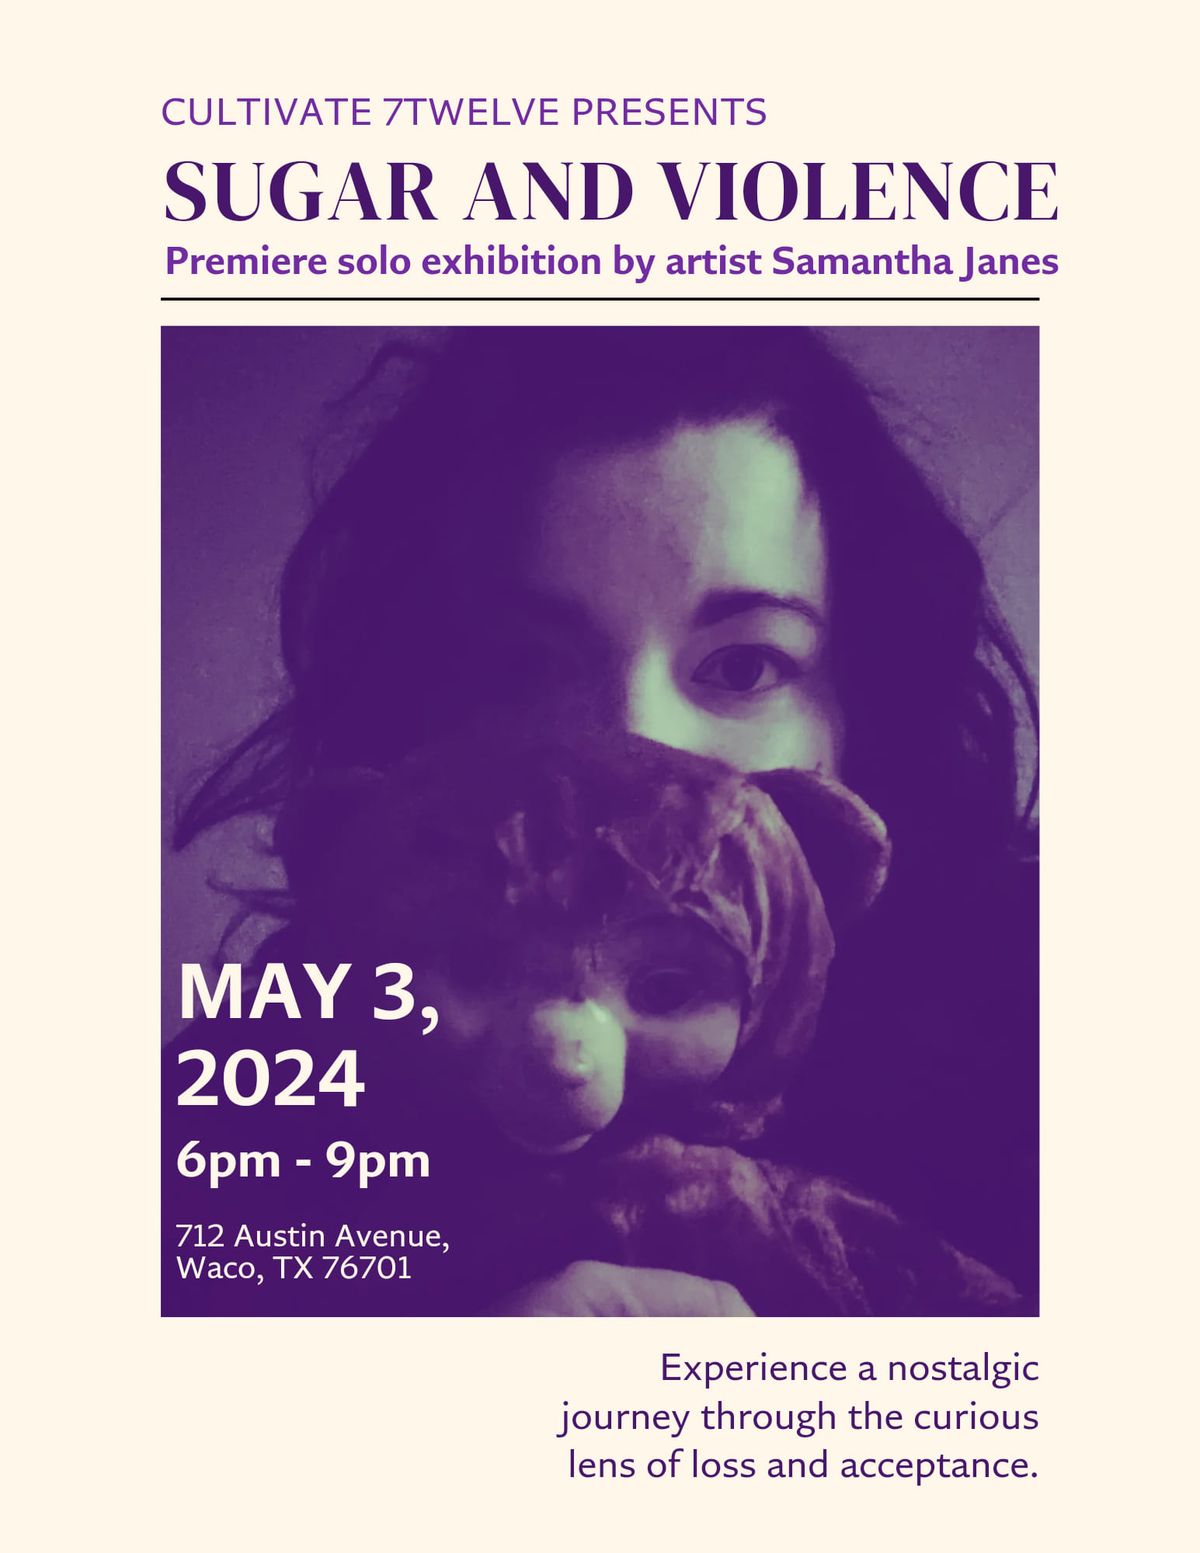 "Sugar and Violence" Art Showcase